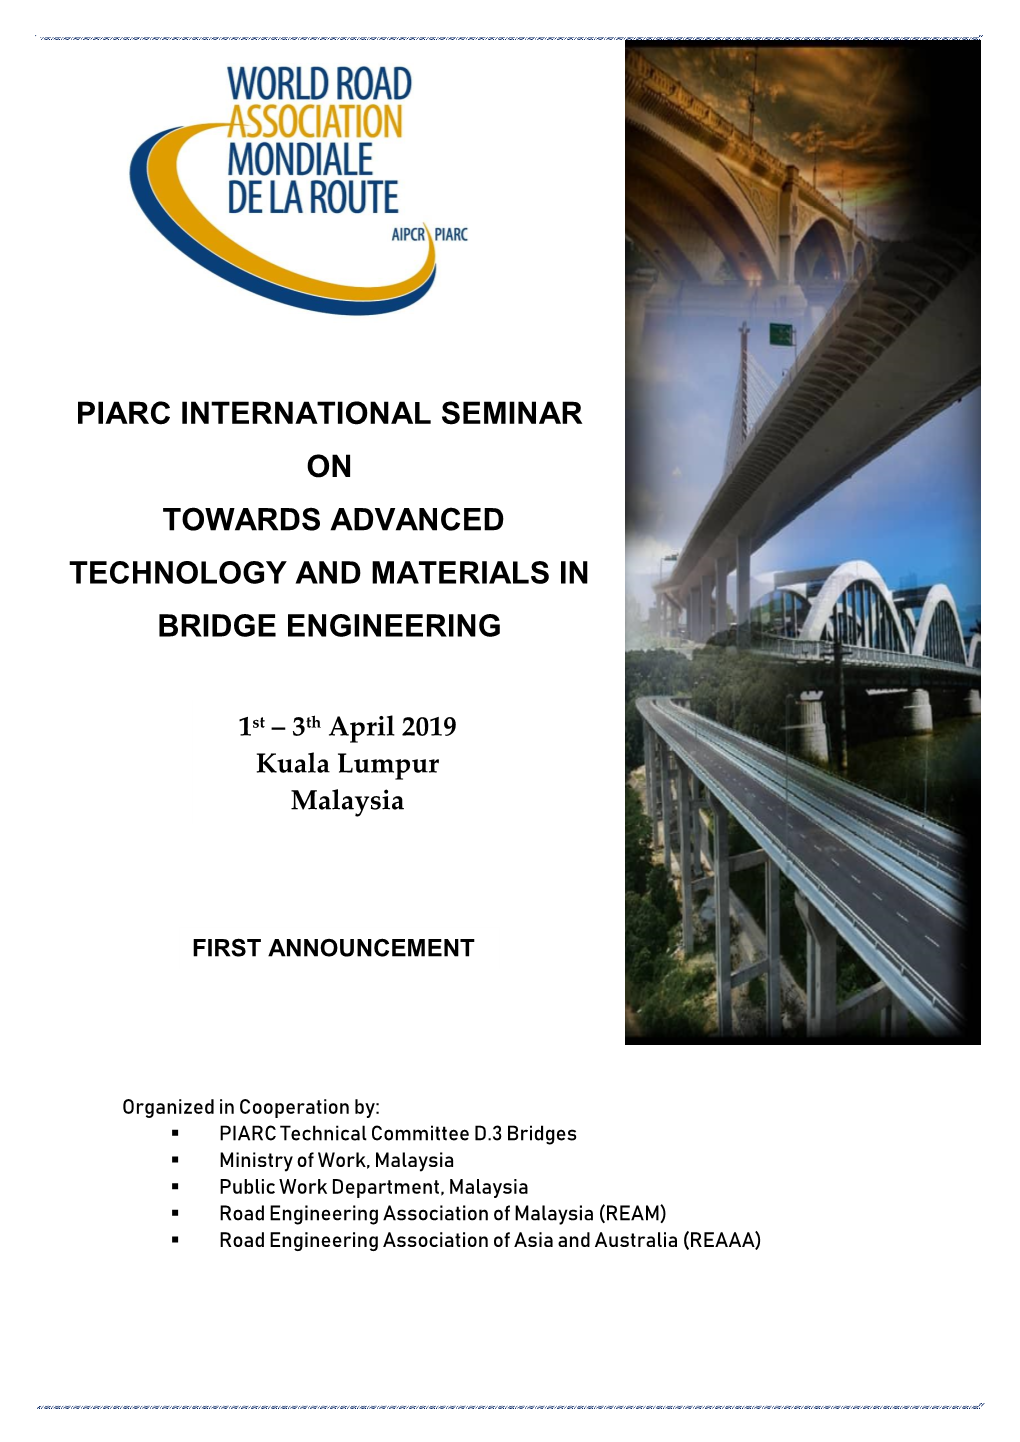 Piarc International Seminar on Towards Advanced